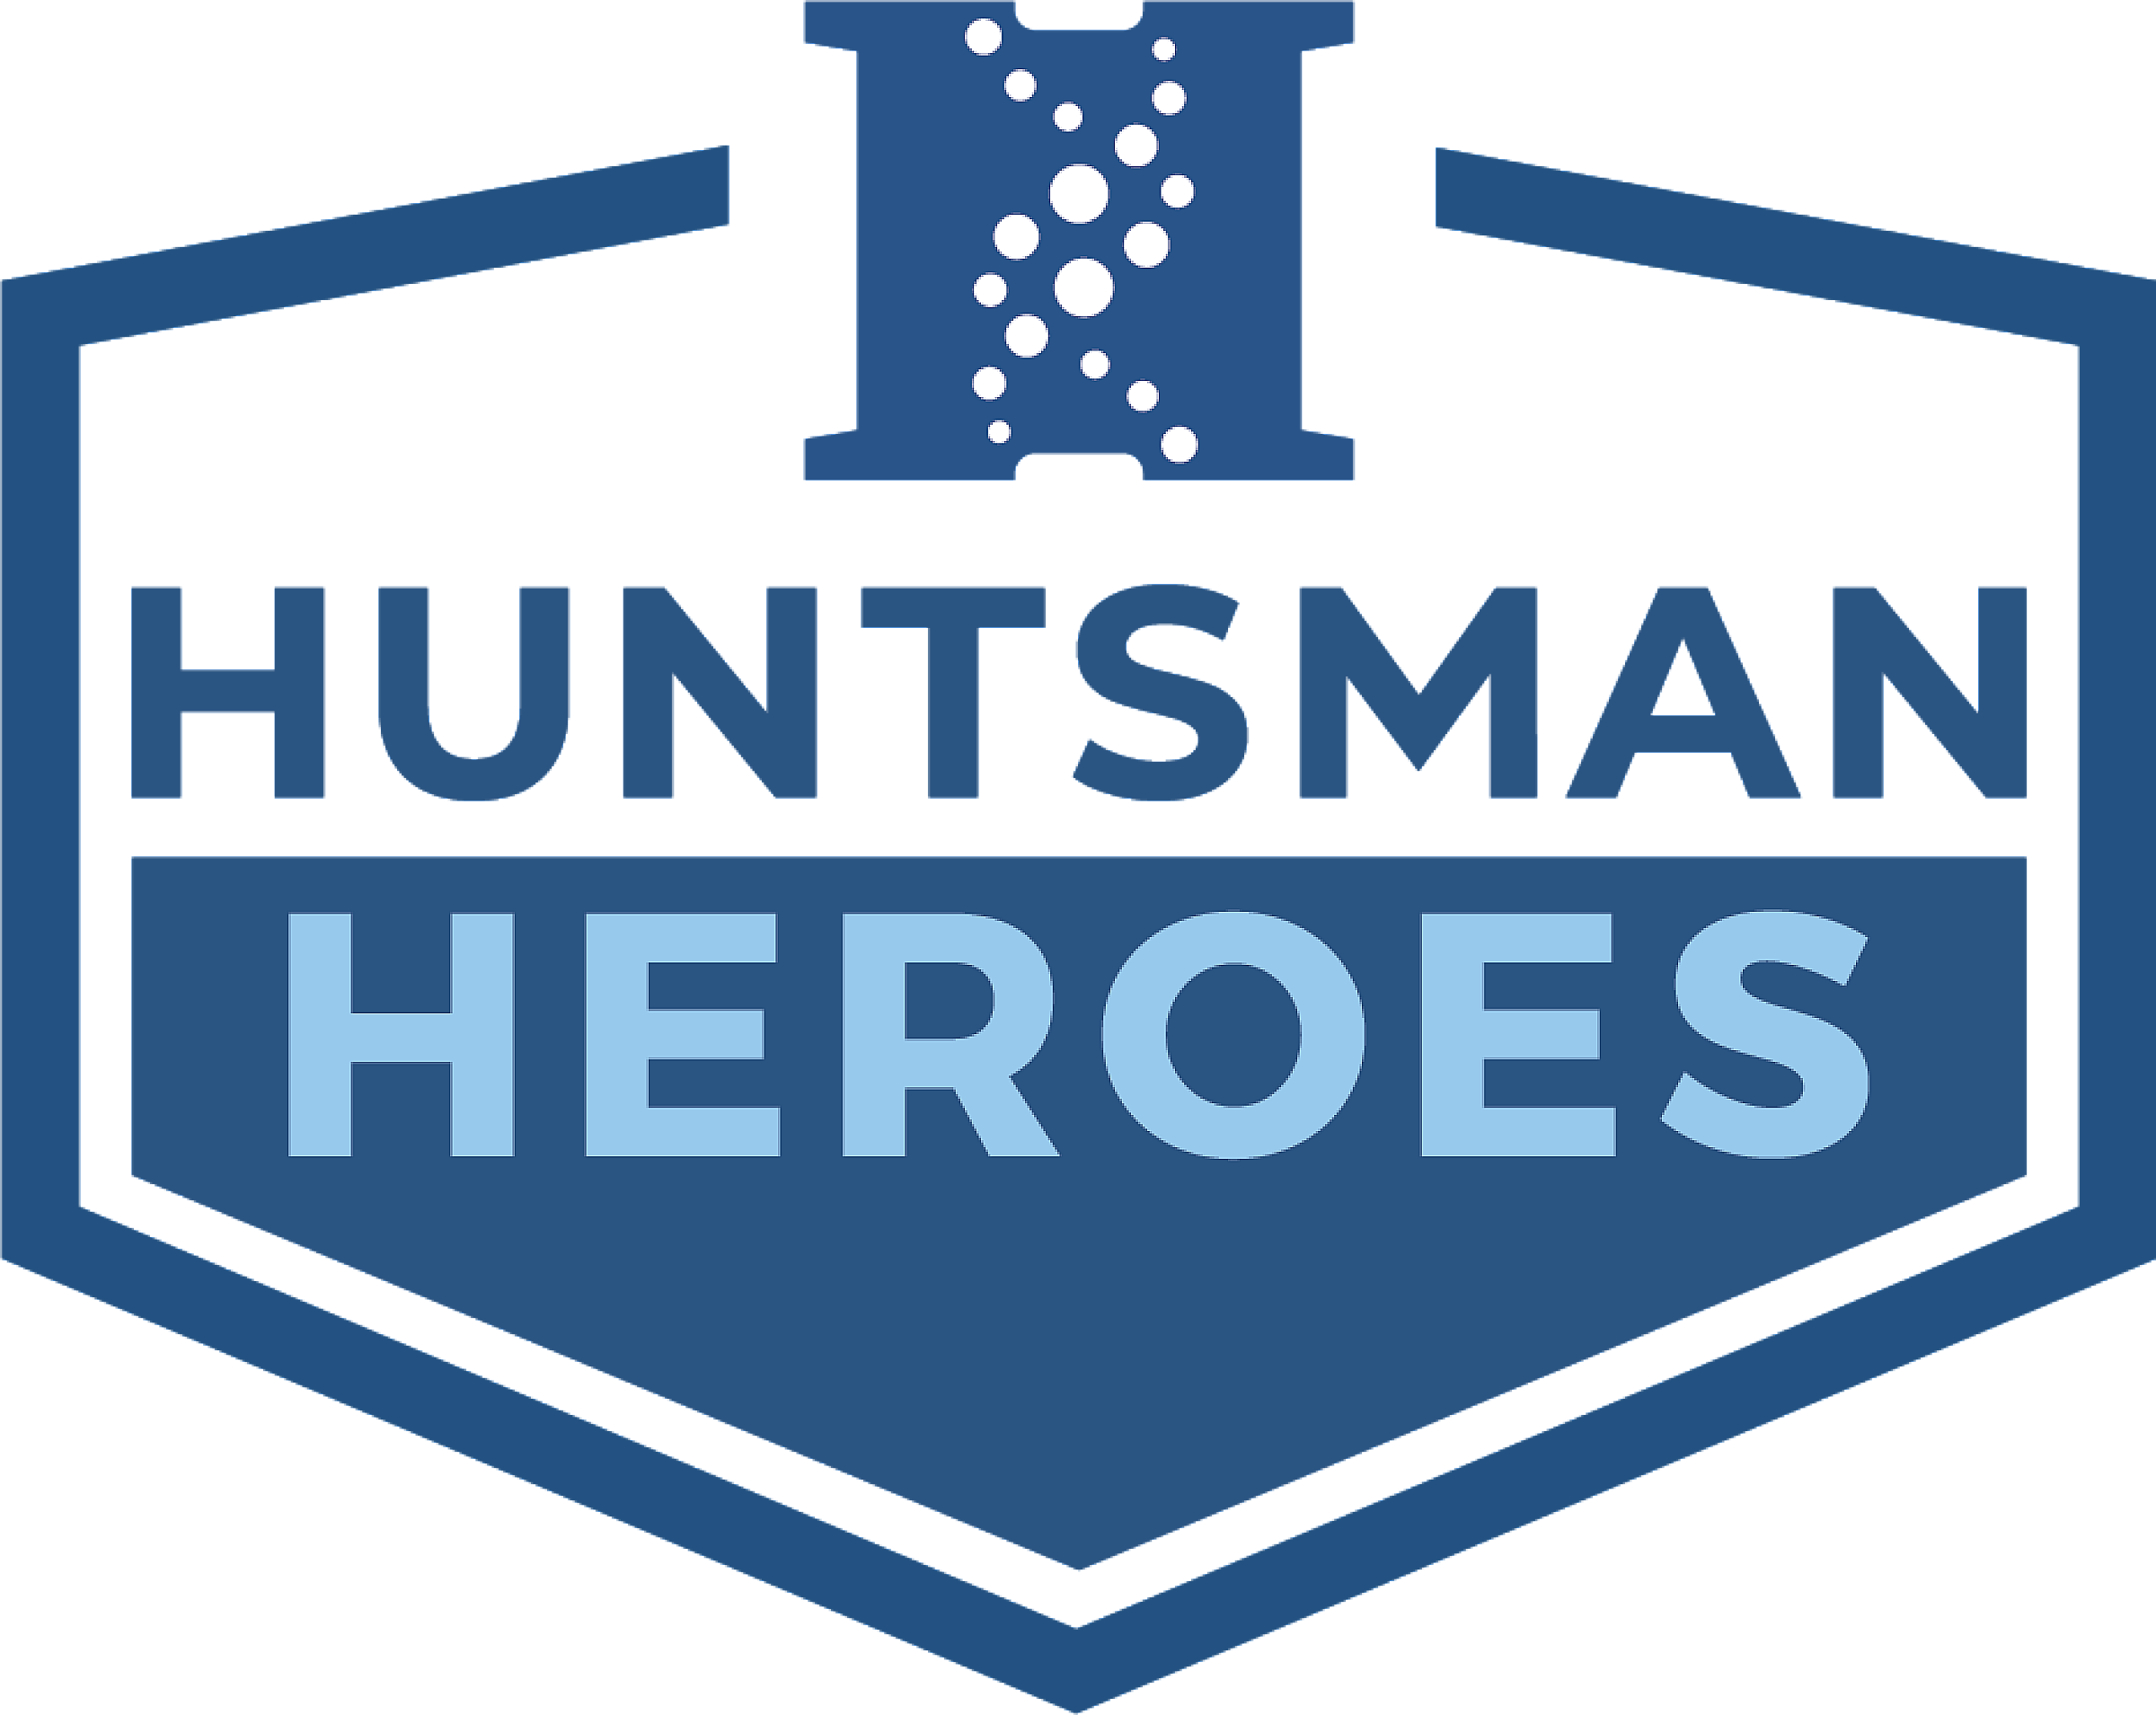 Huntsman Heroes logo